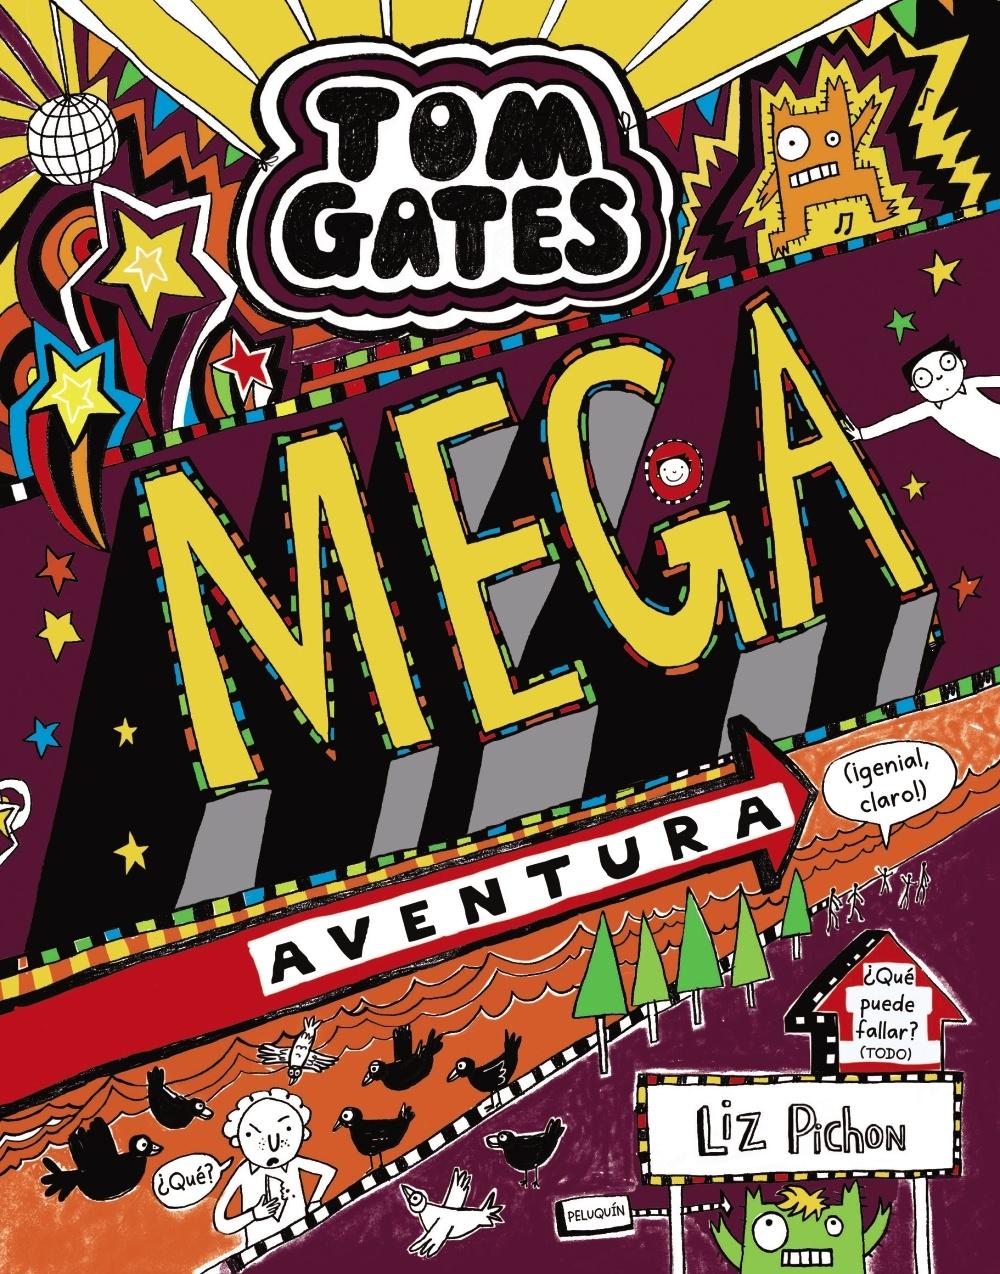  Mega aventura (¡genial, claro!) Tom Gates 13. 